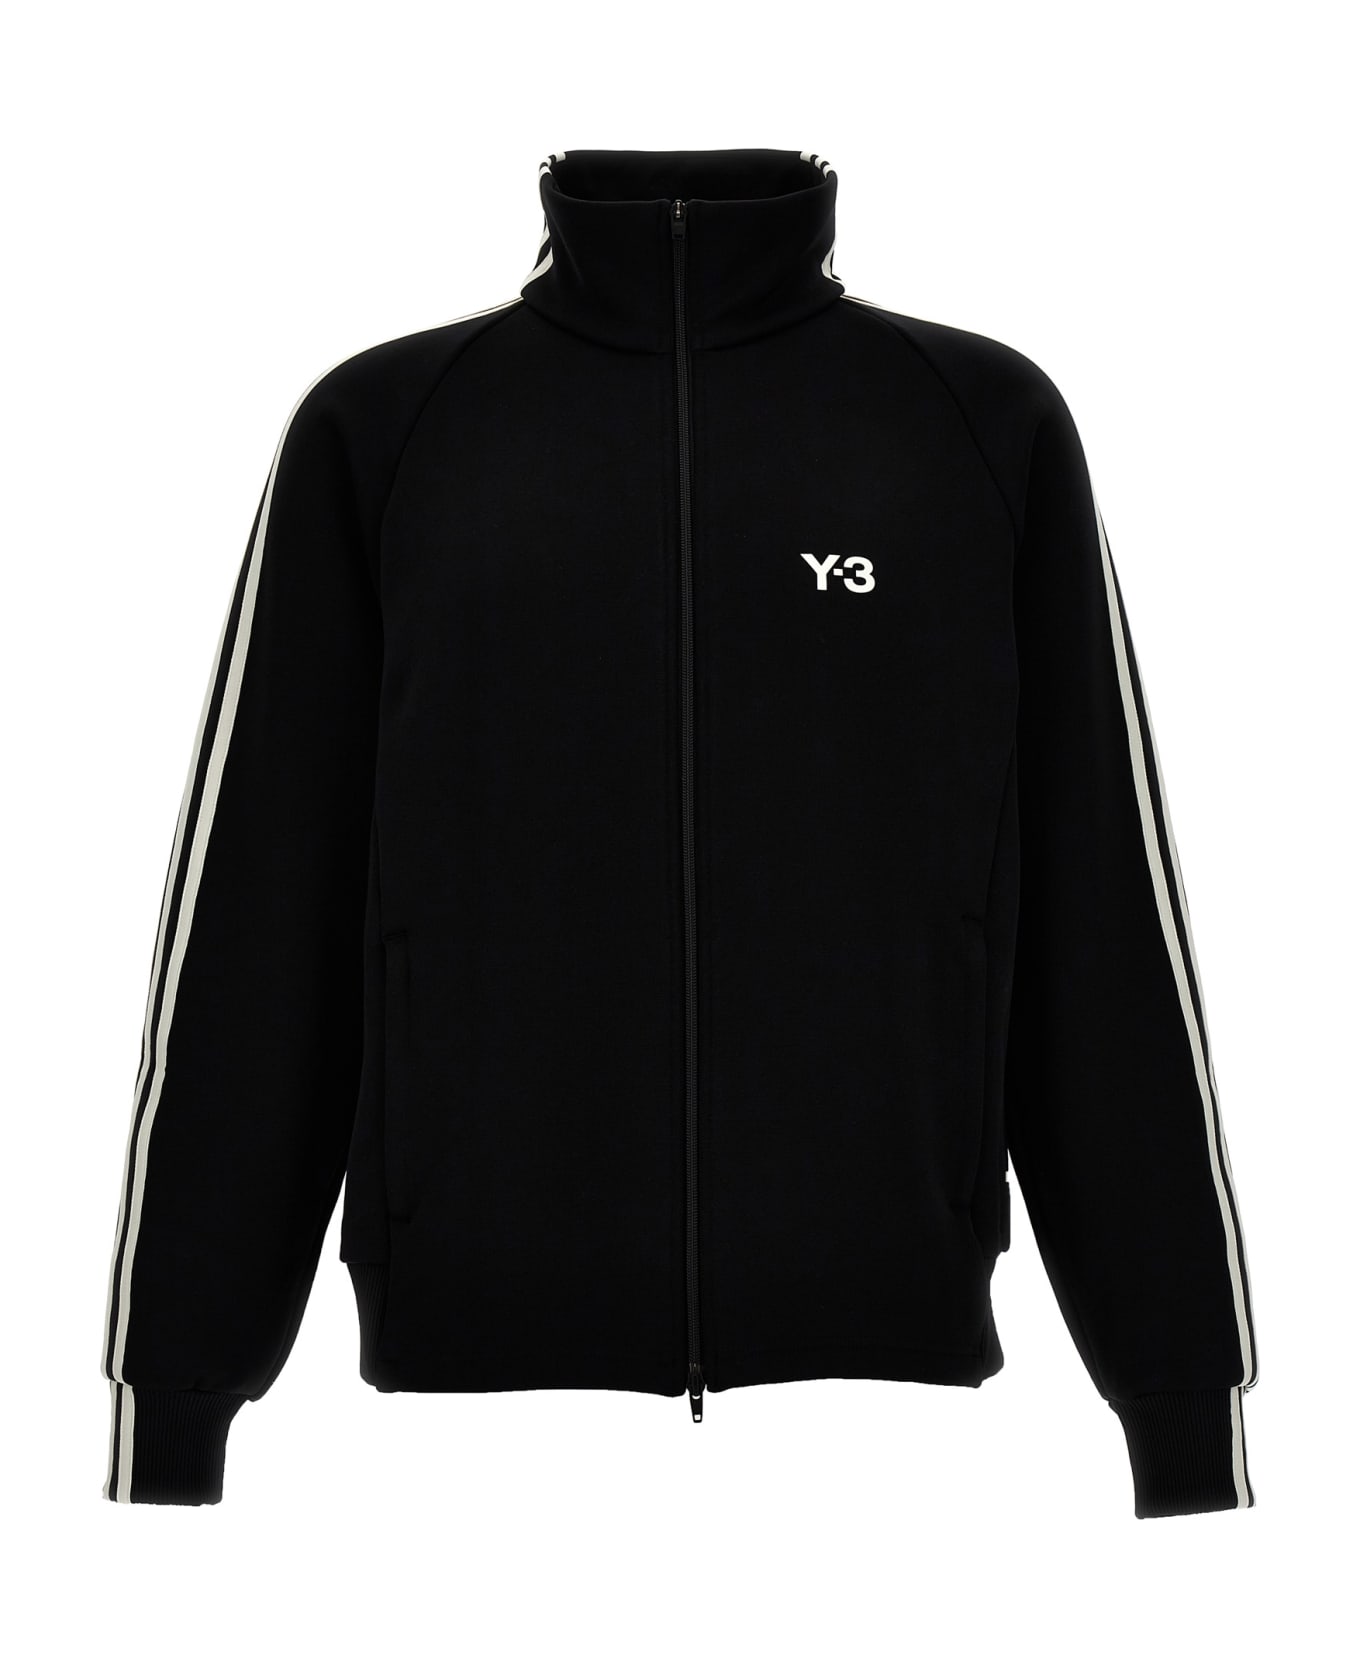 Y-3 Contrast Band Sweatshirt - White/Black